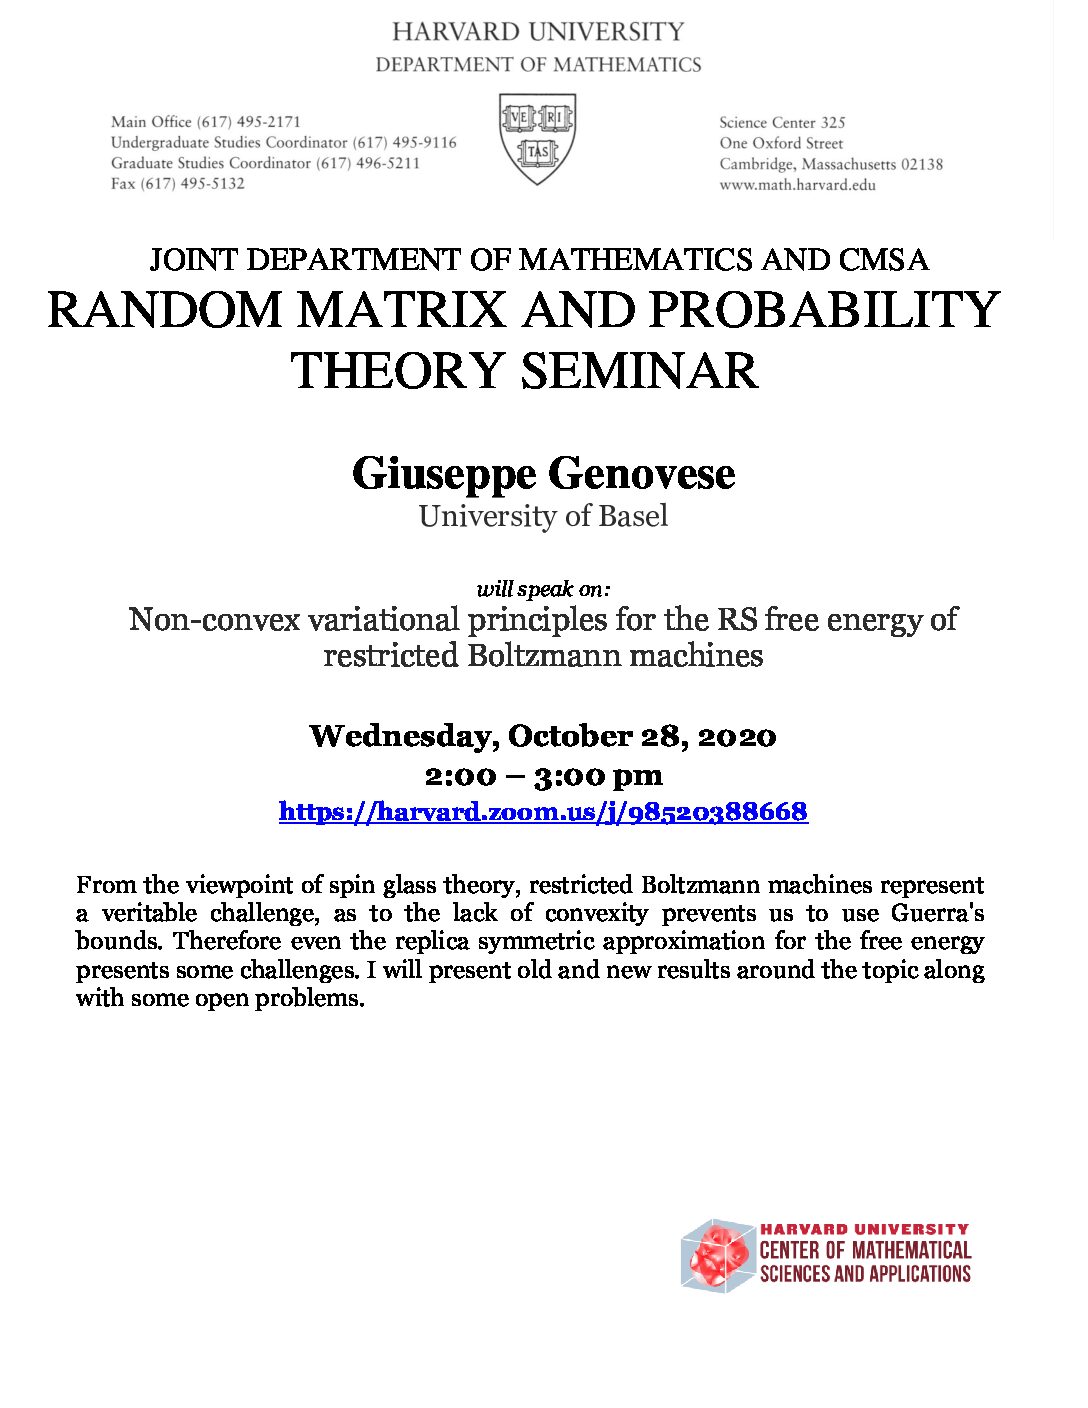 RMPT-Seminar-10.28.20-1-pdf